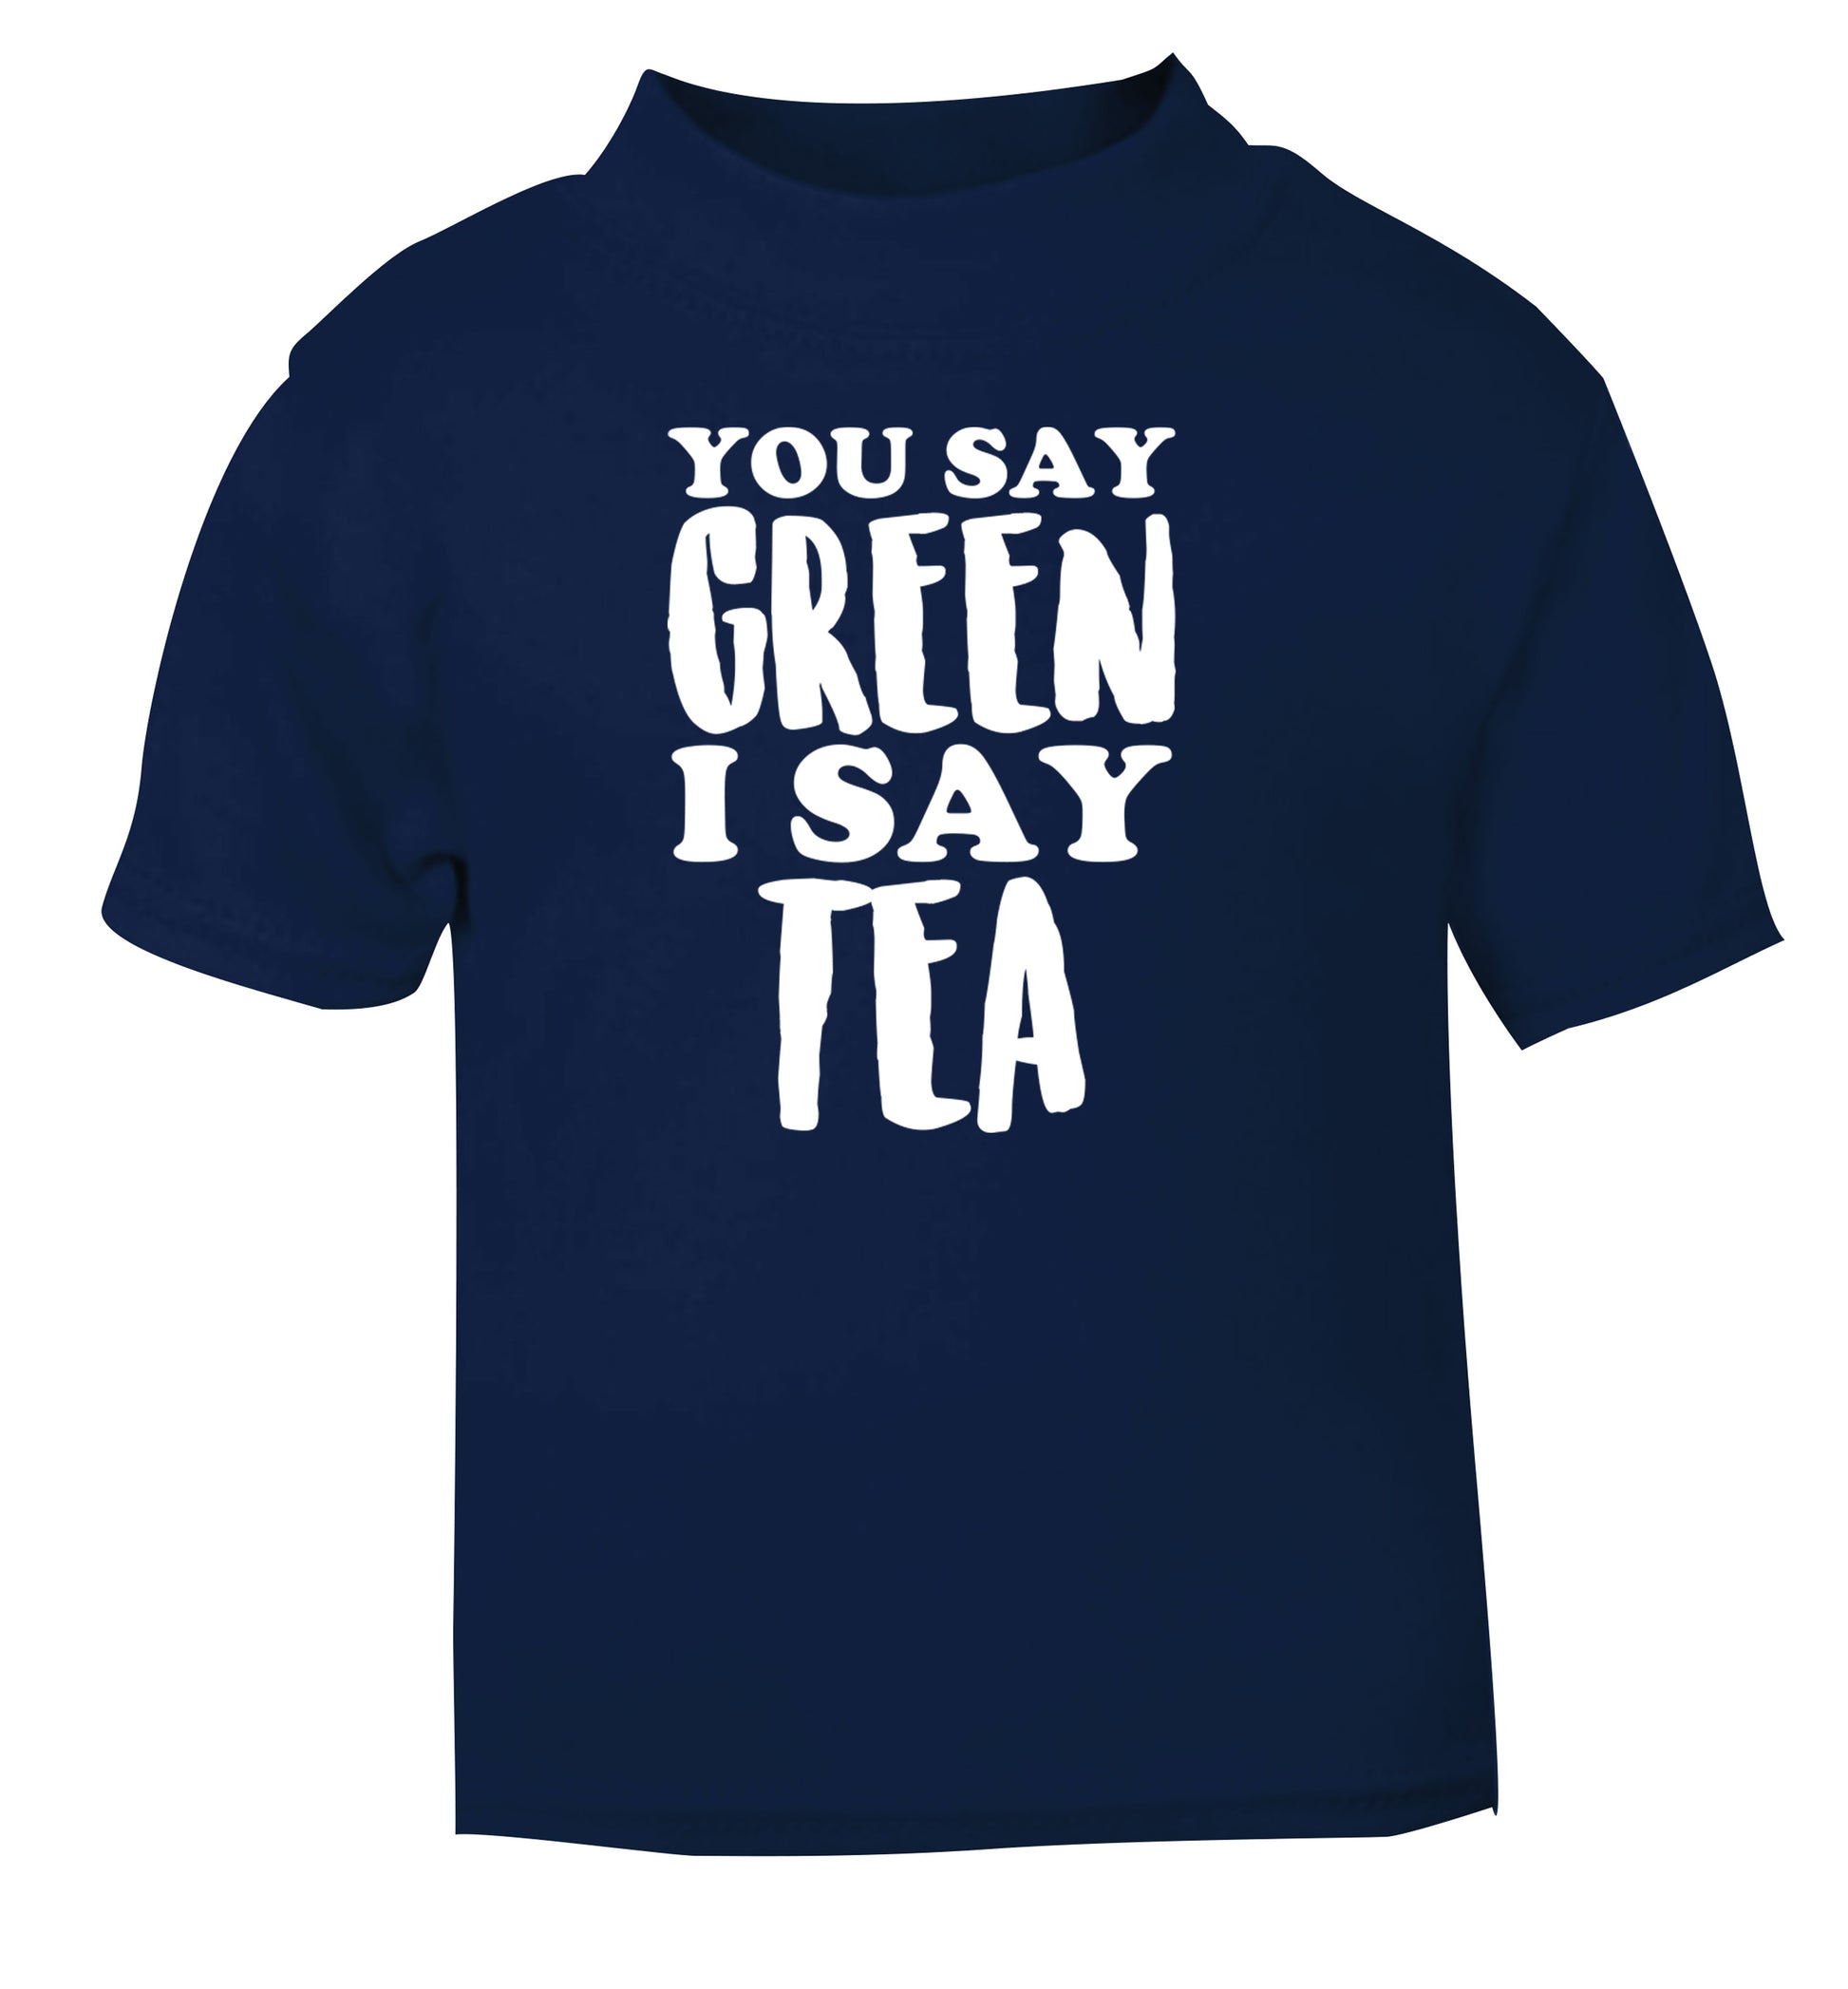 You say green I say tea! navy Baby Toddler Tshirt 2 Years